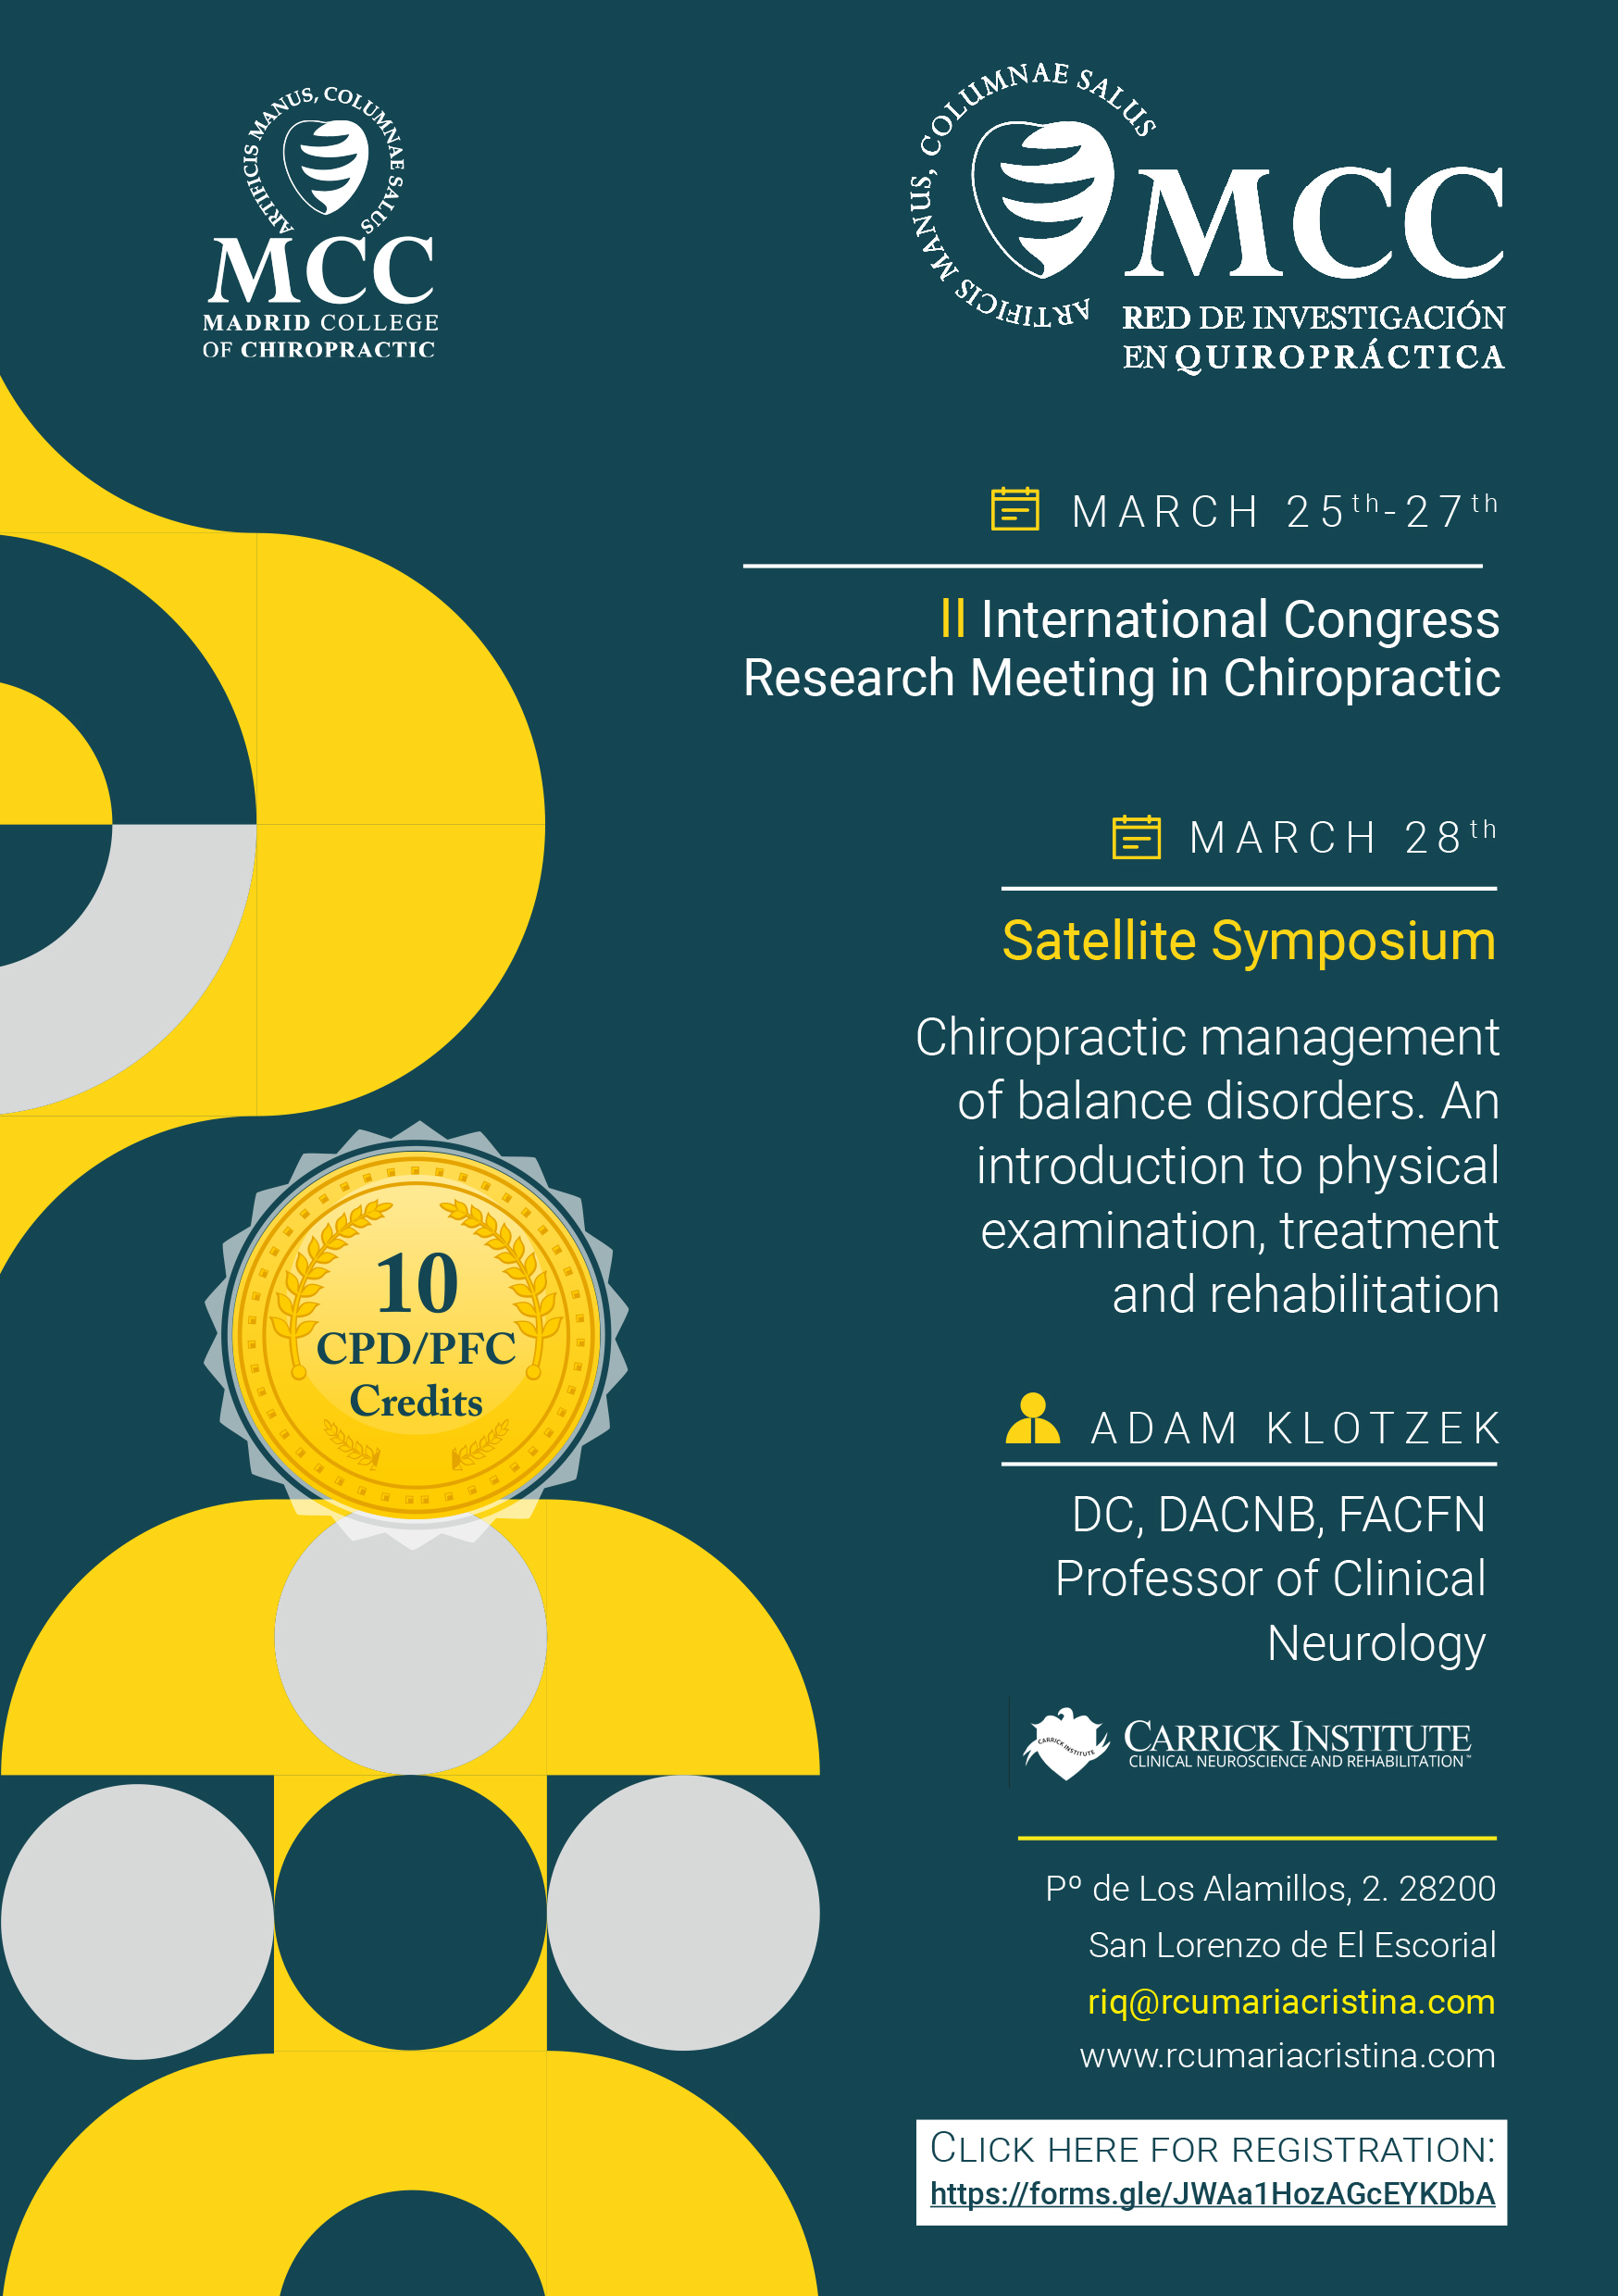 Simposio Satélite al II International Congress Research Meeting in Chiropractic